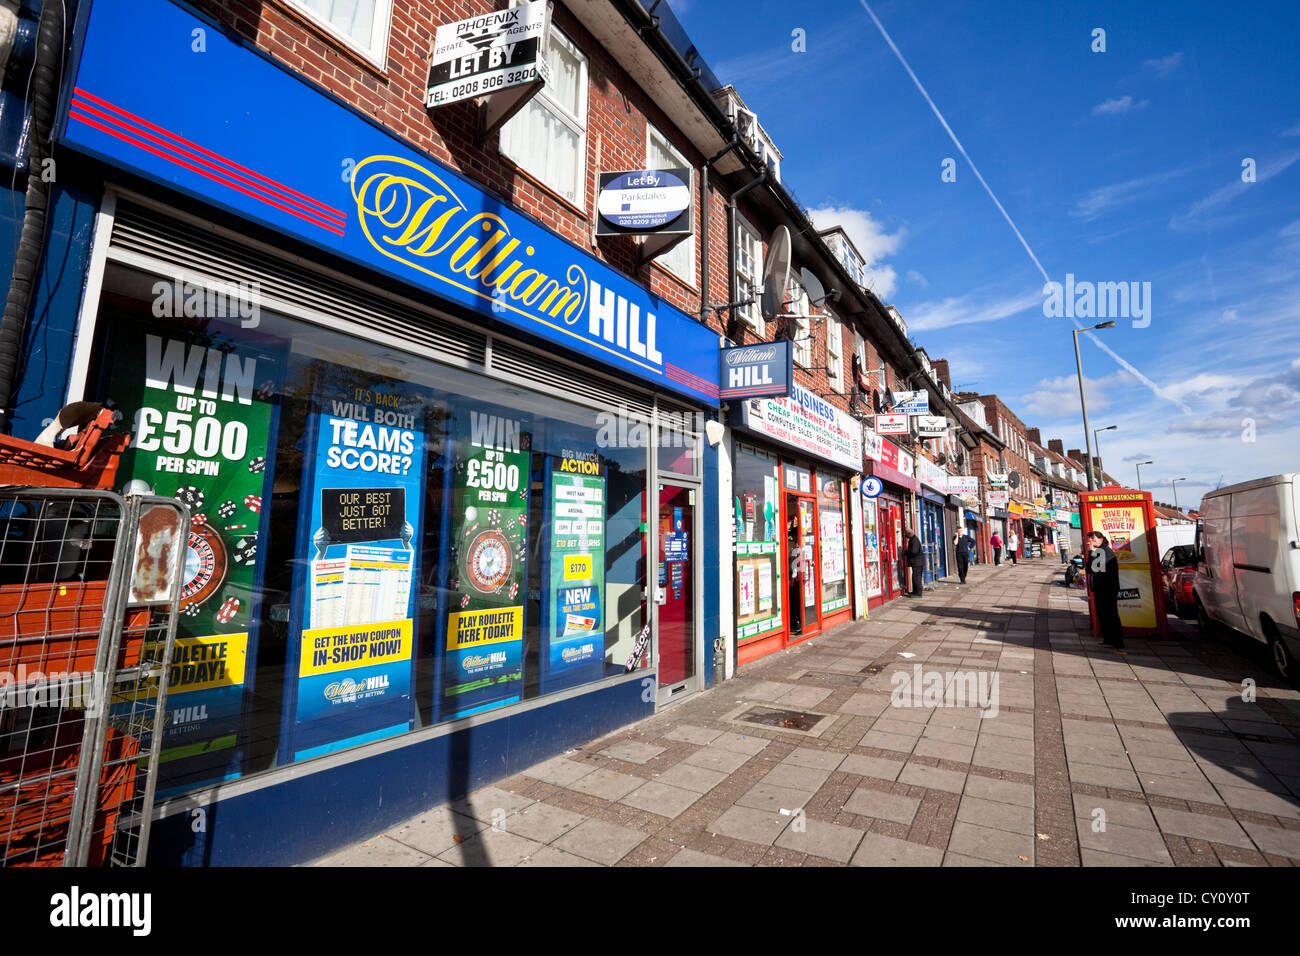 Deansbrook Road high street shops, Mill Hill, London, England, UK. Stock Photo